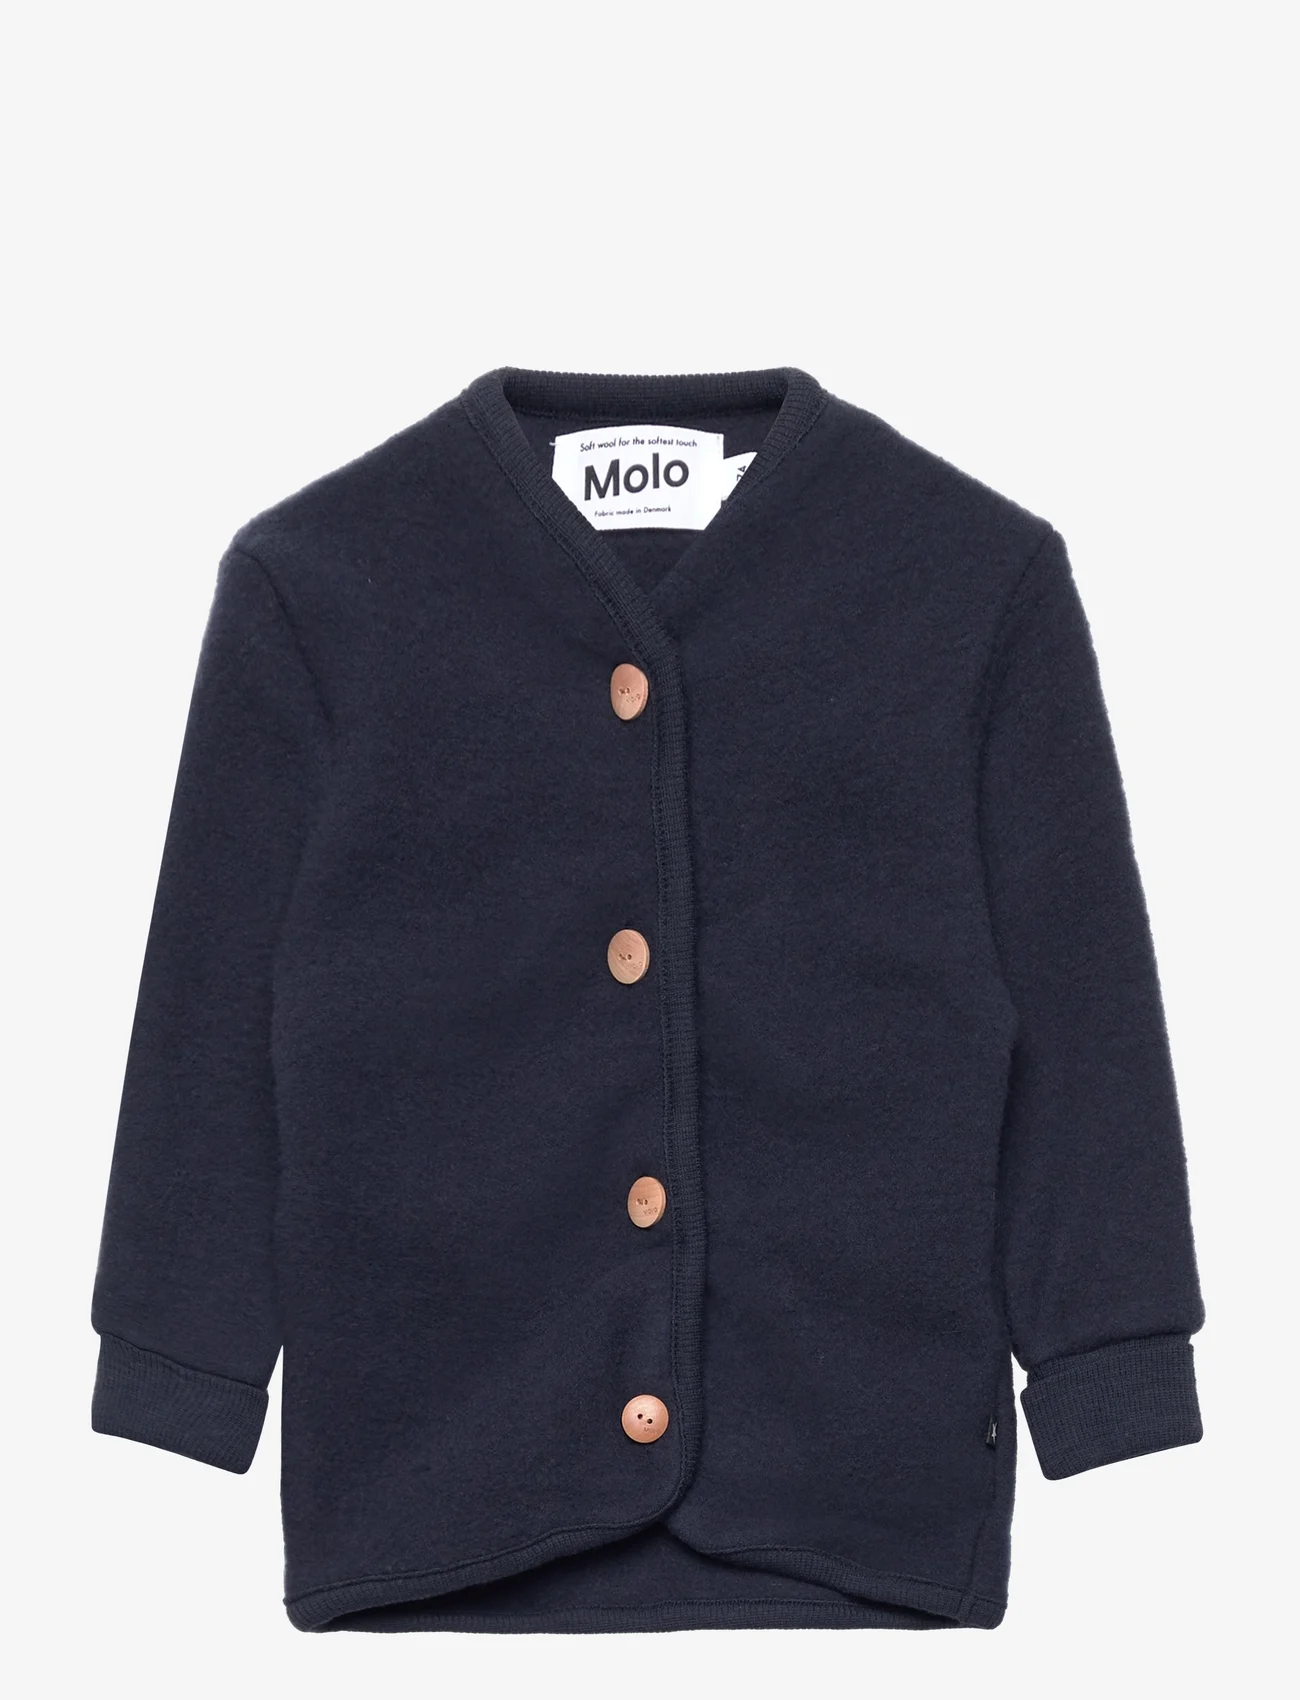 Molo - Umber - fleece jacket - dark navy - 0